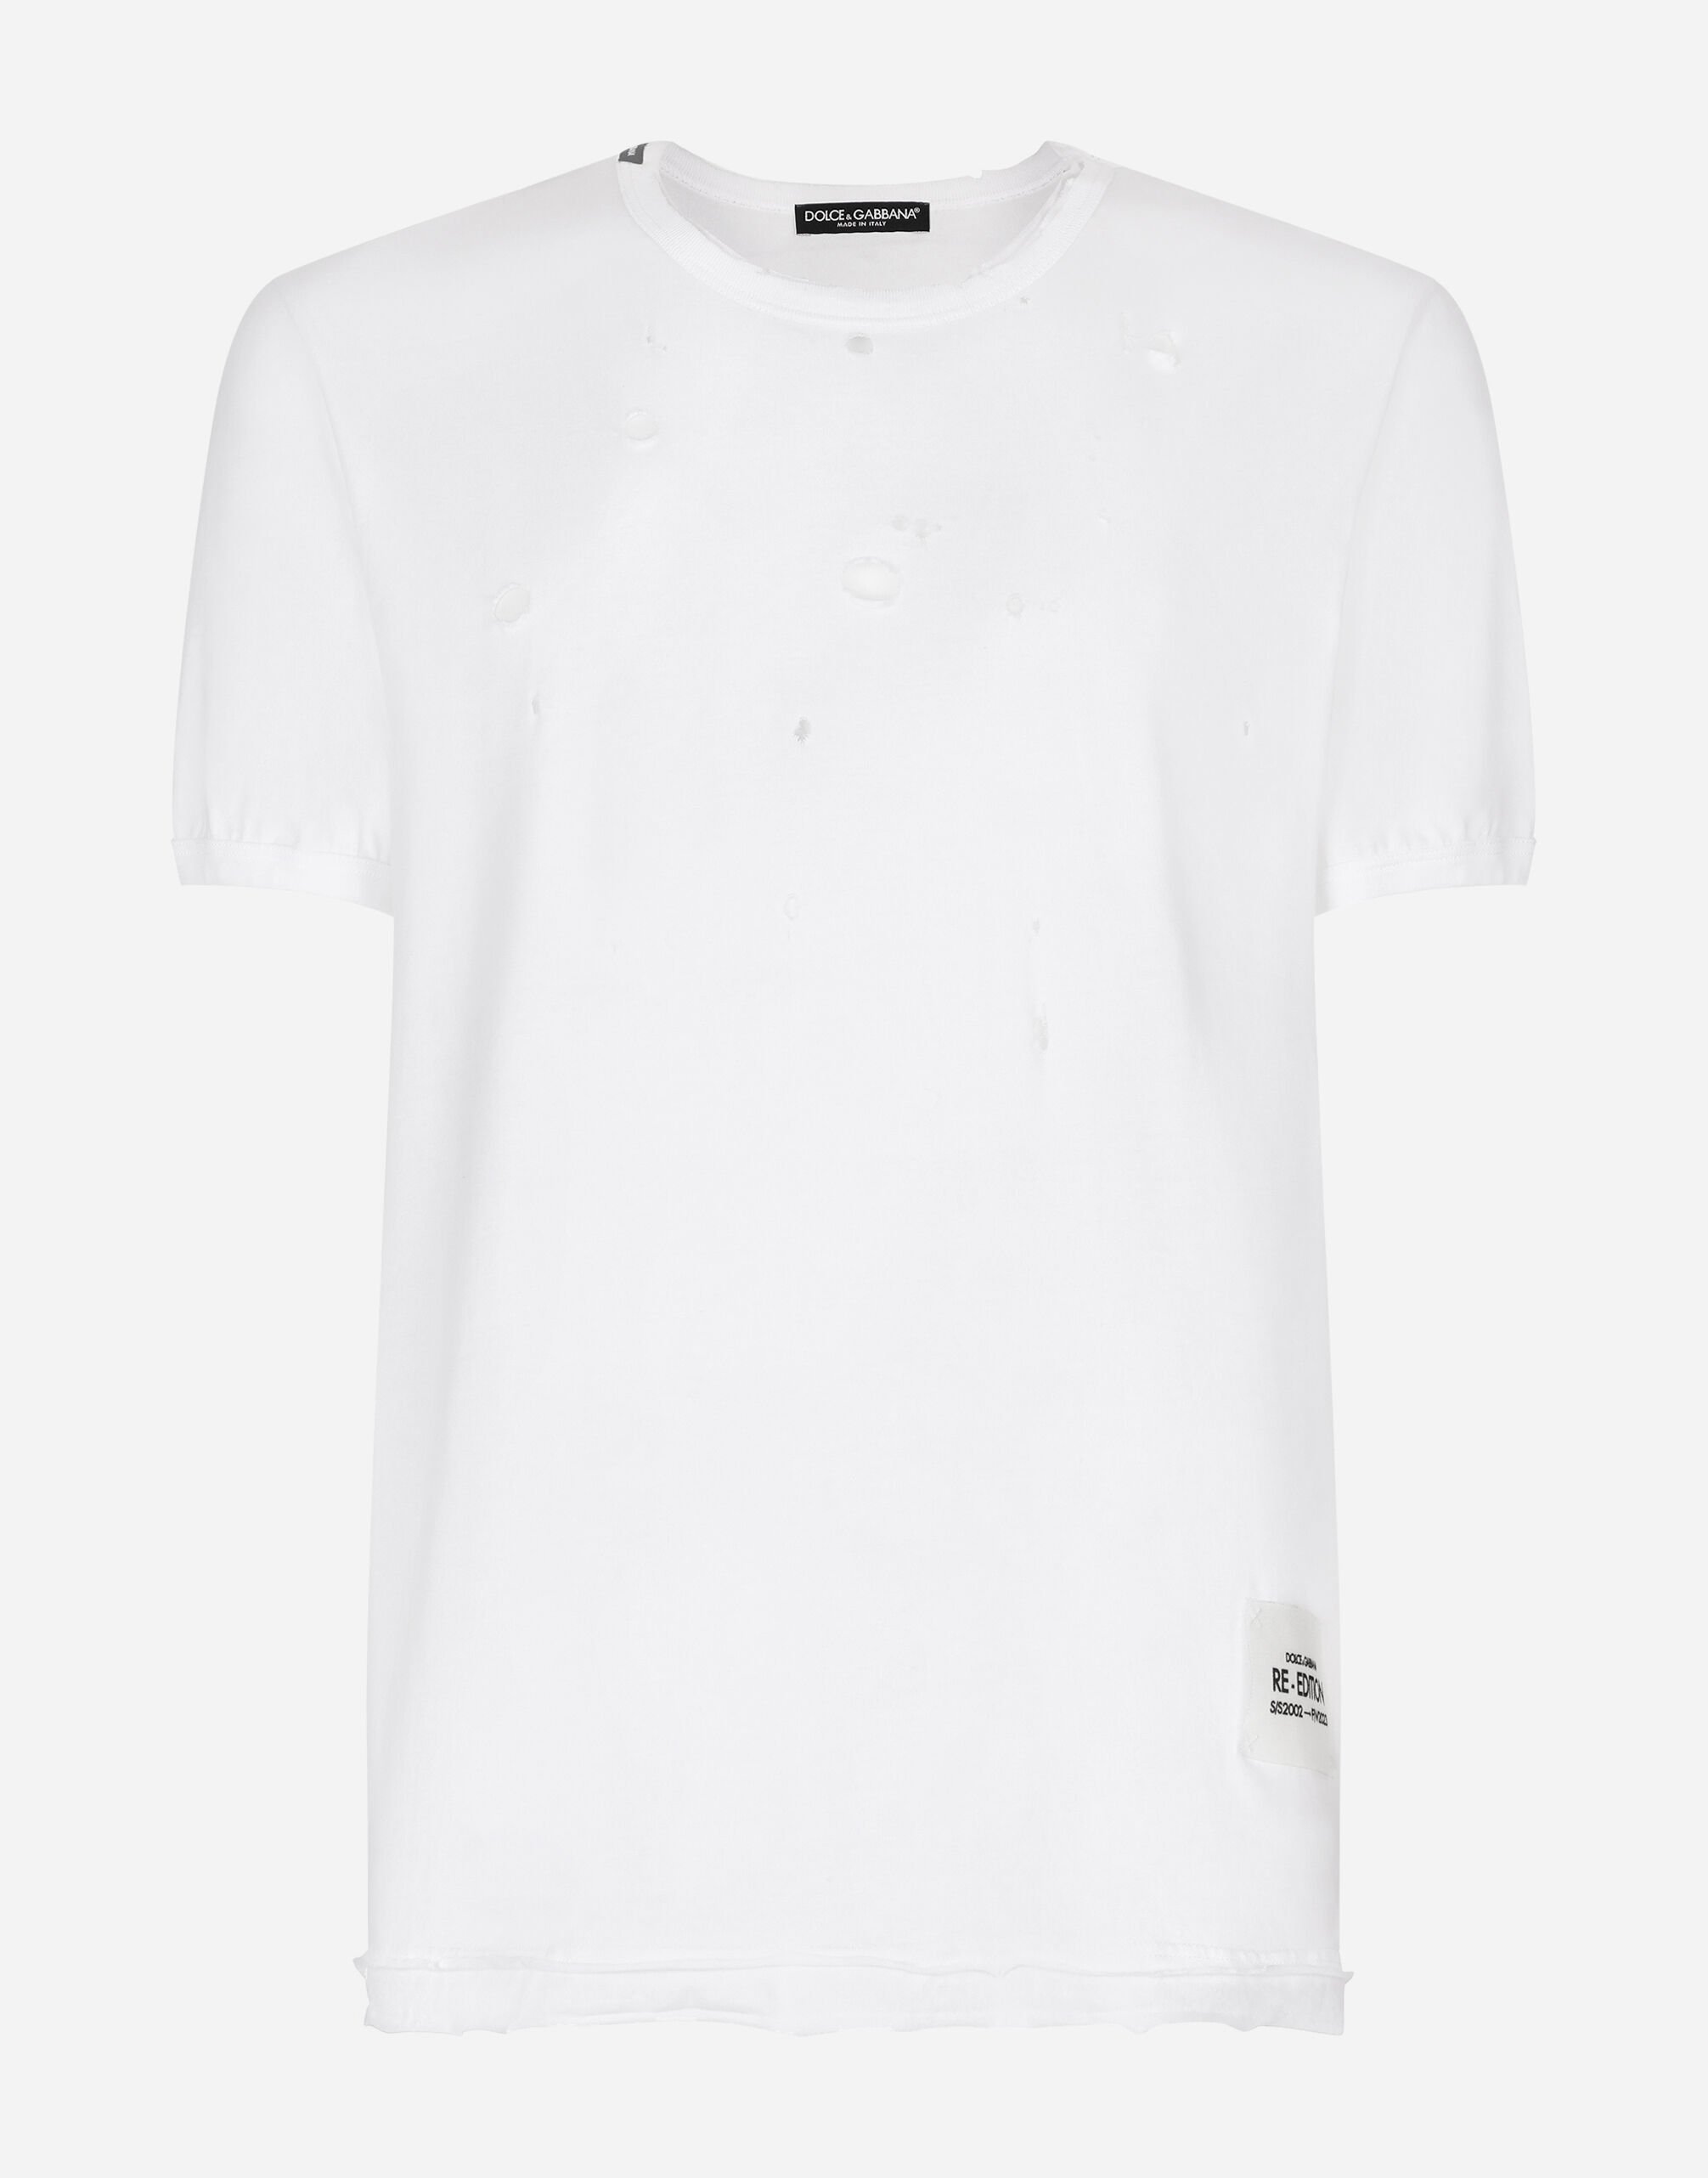 Dolce&Gabbana Cotton T-shirt with rips Blue GW3JATFUFJR